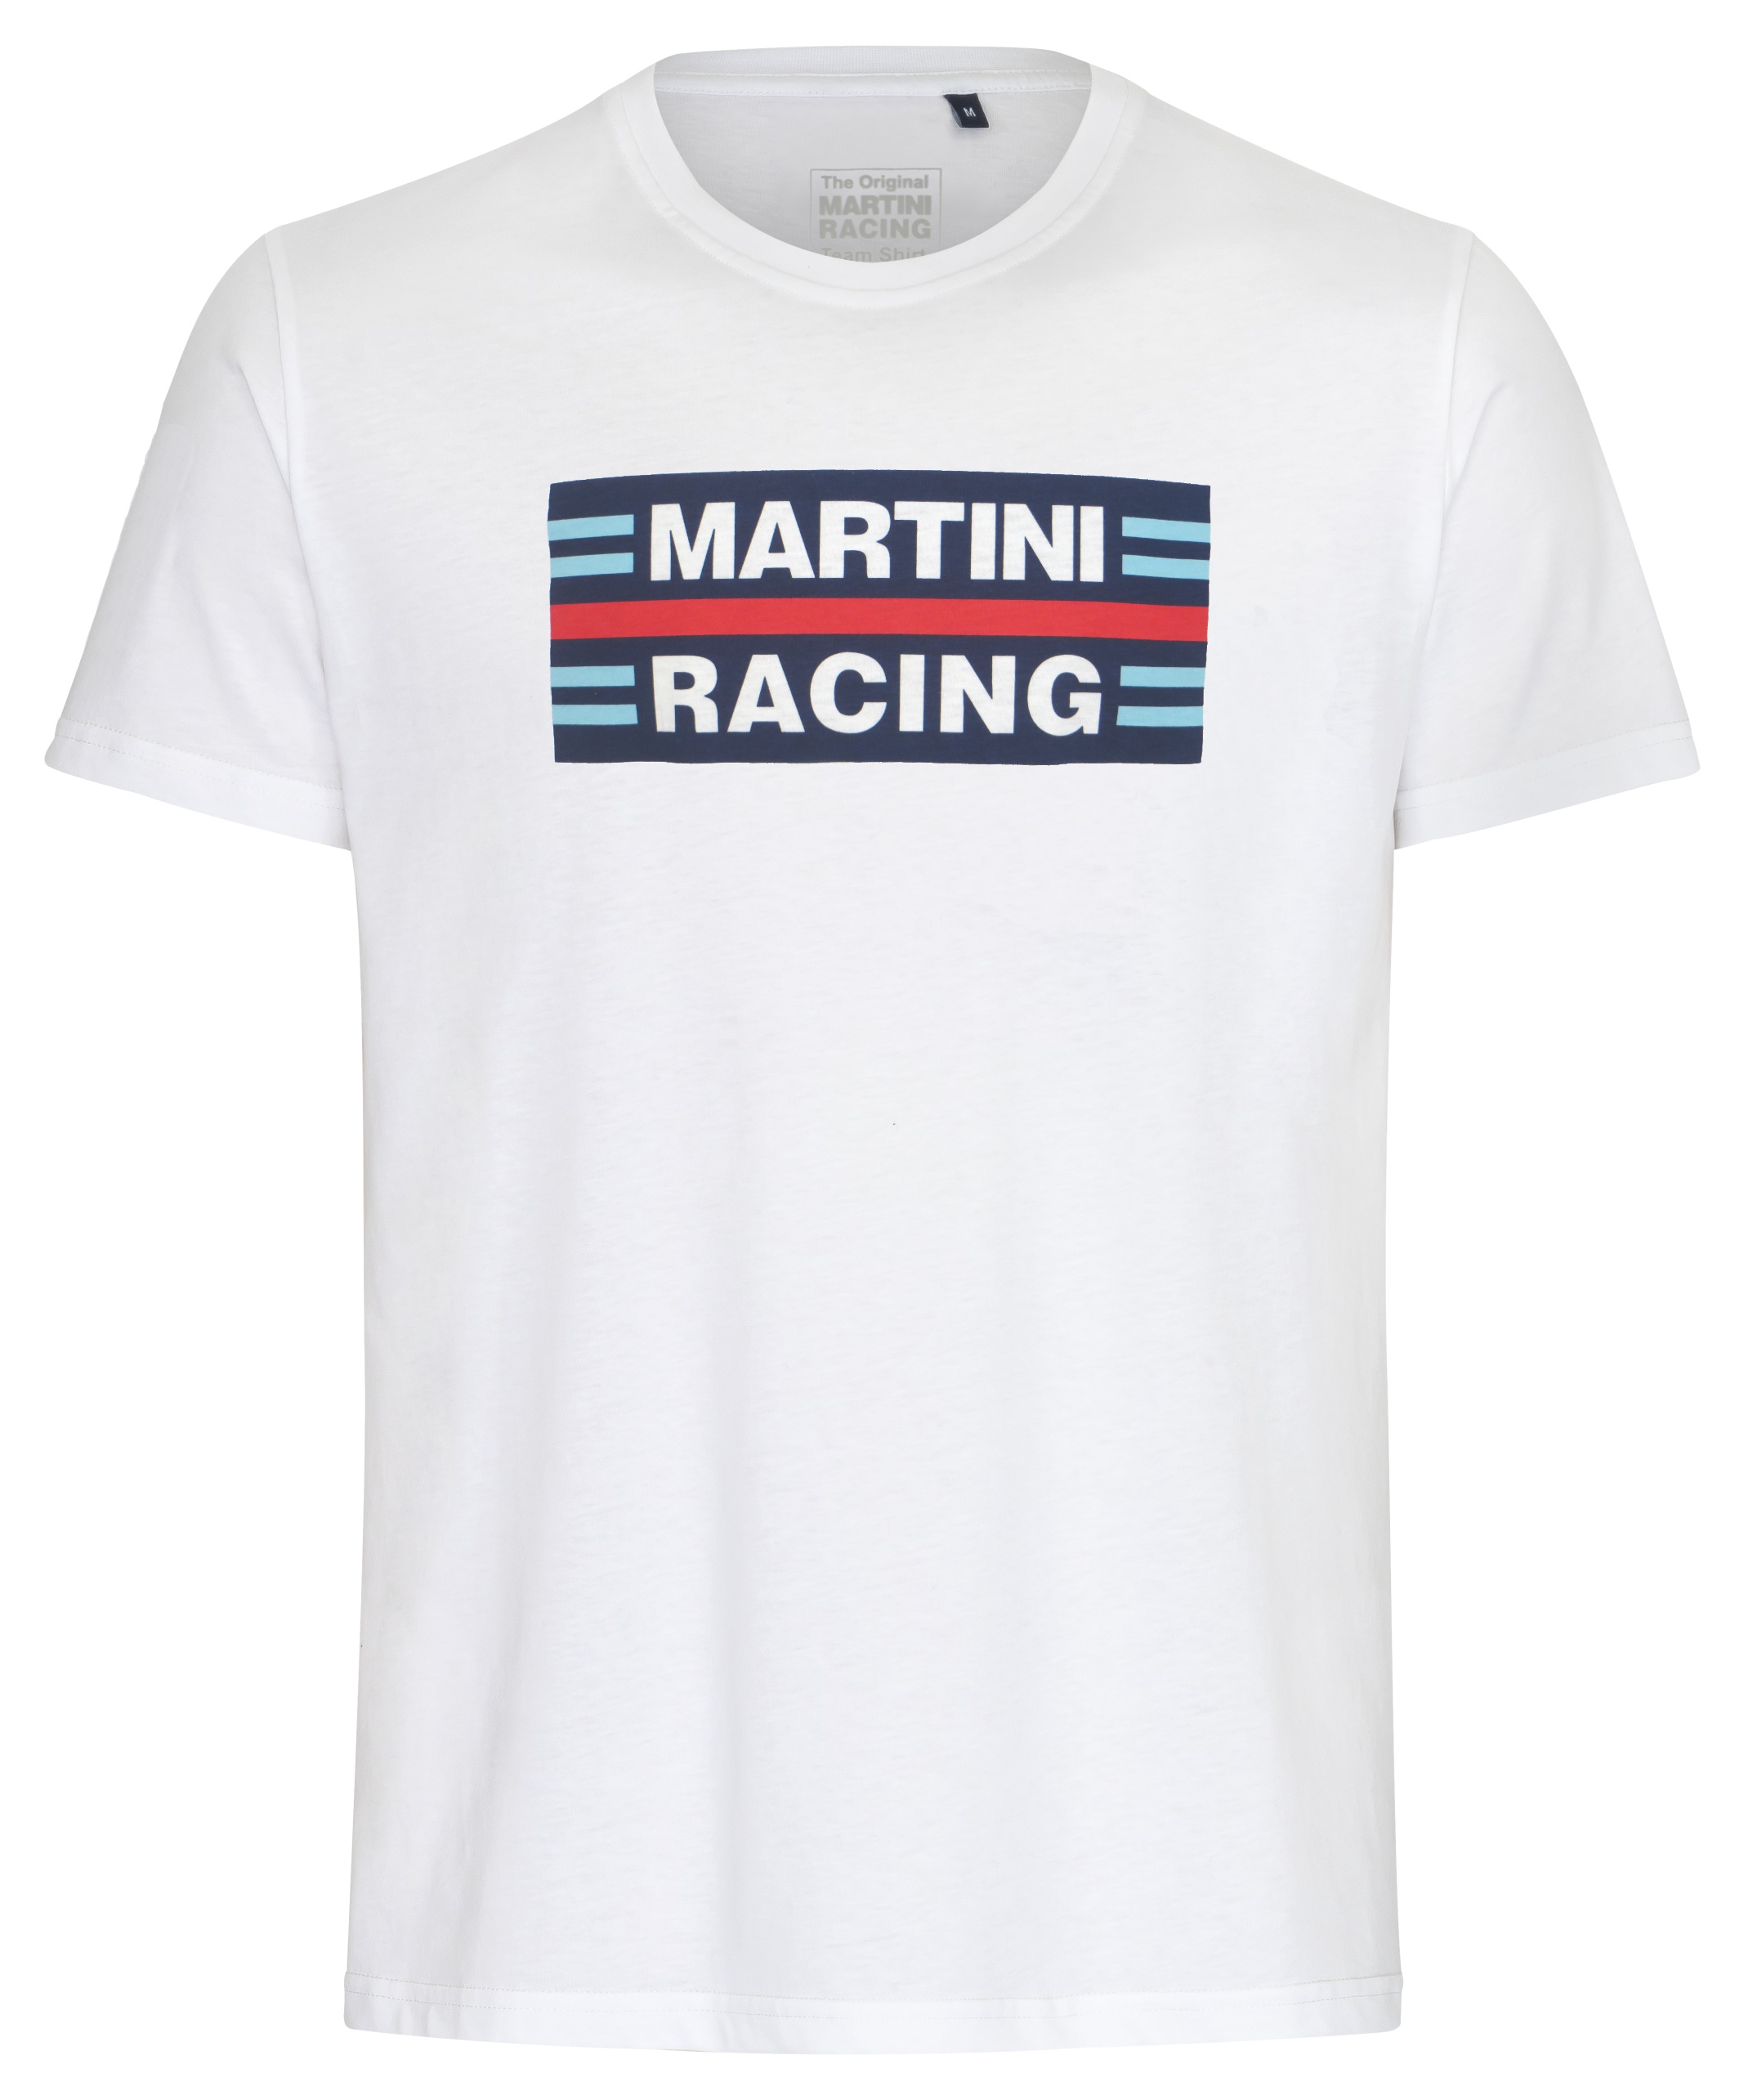 MARTINI RACING Team Shirt